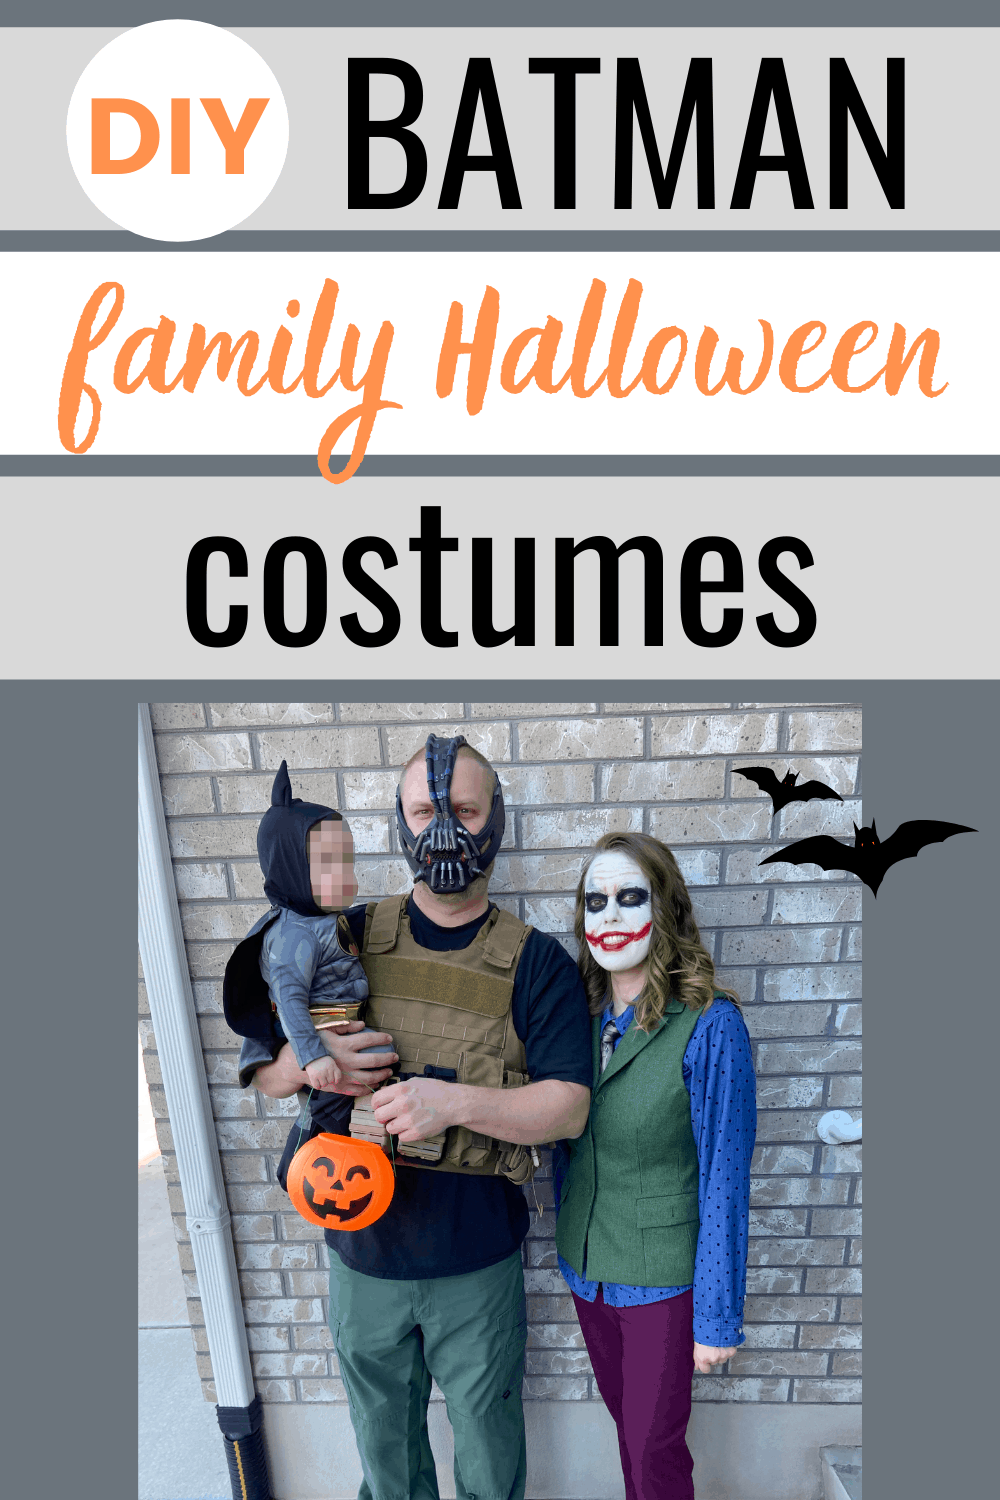 DIY Batman themed family Halloween costumes